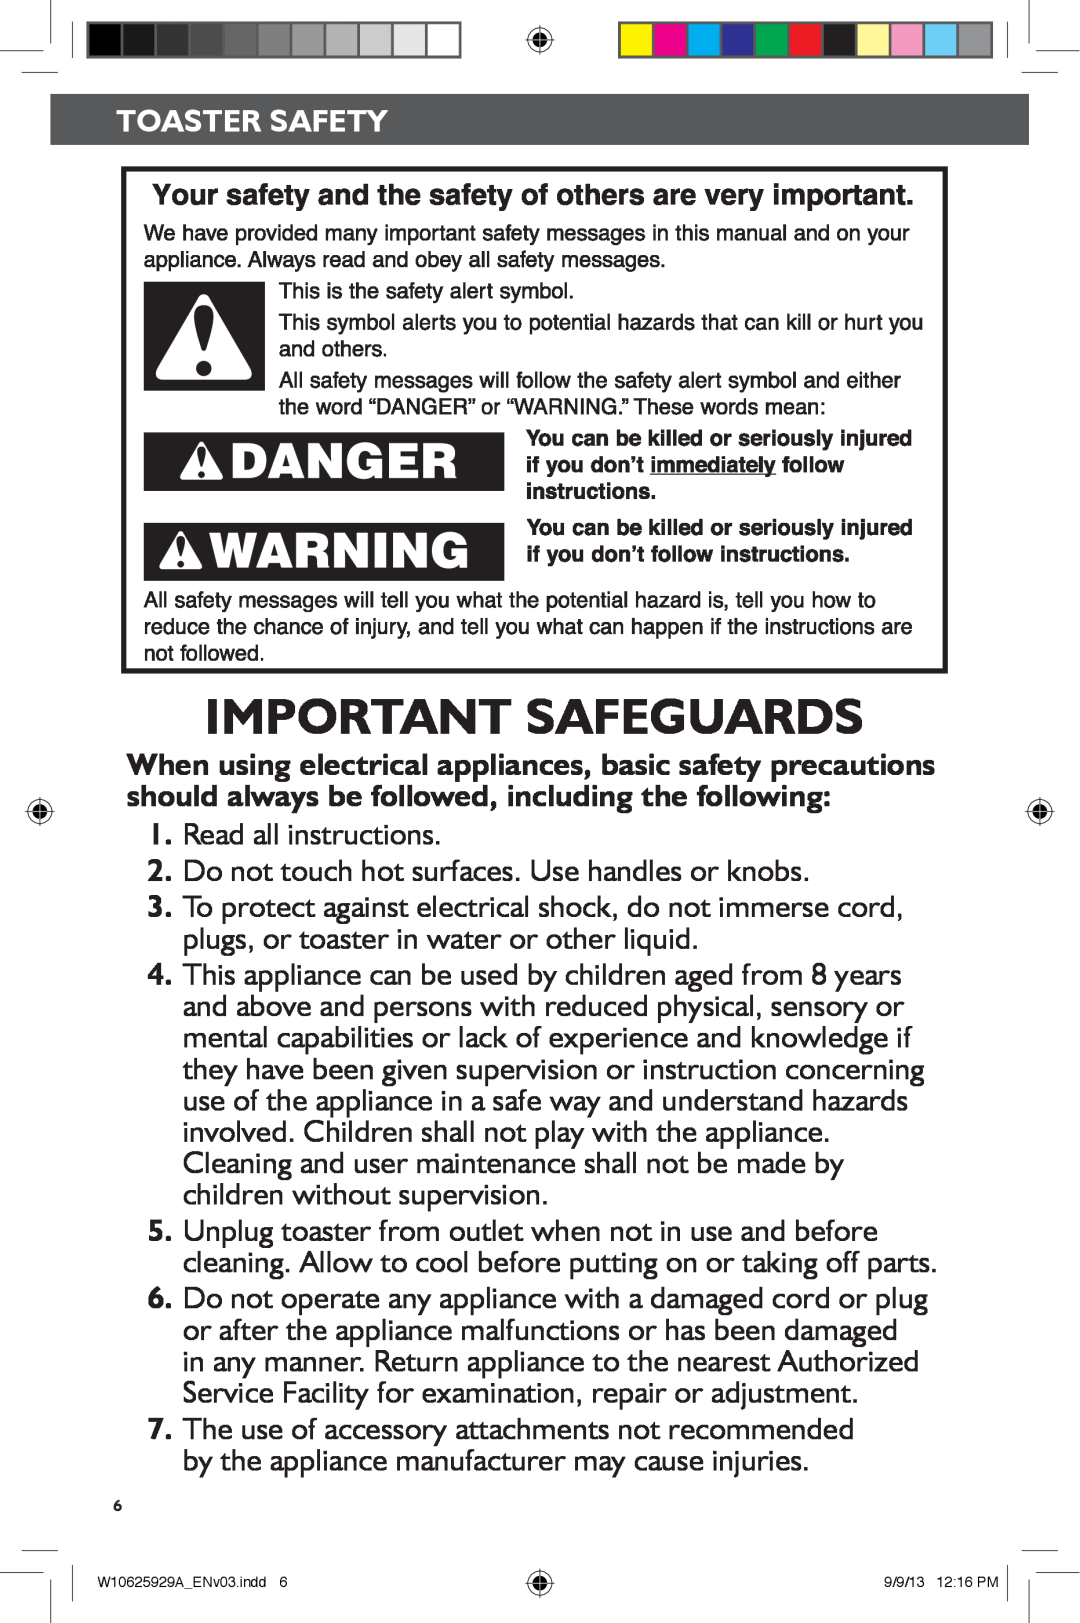 KitchenAid 5KMT221, 5KMT421 manual Important Safeguards, Toaster Safety 